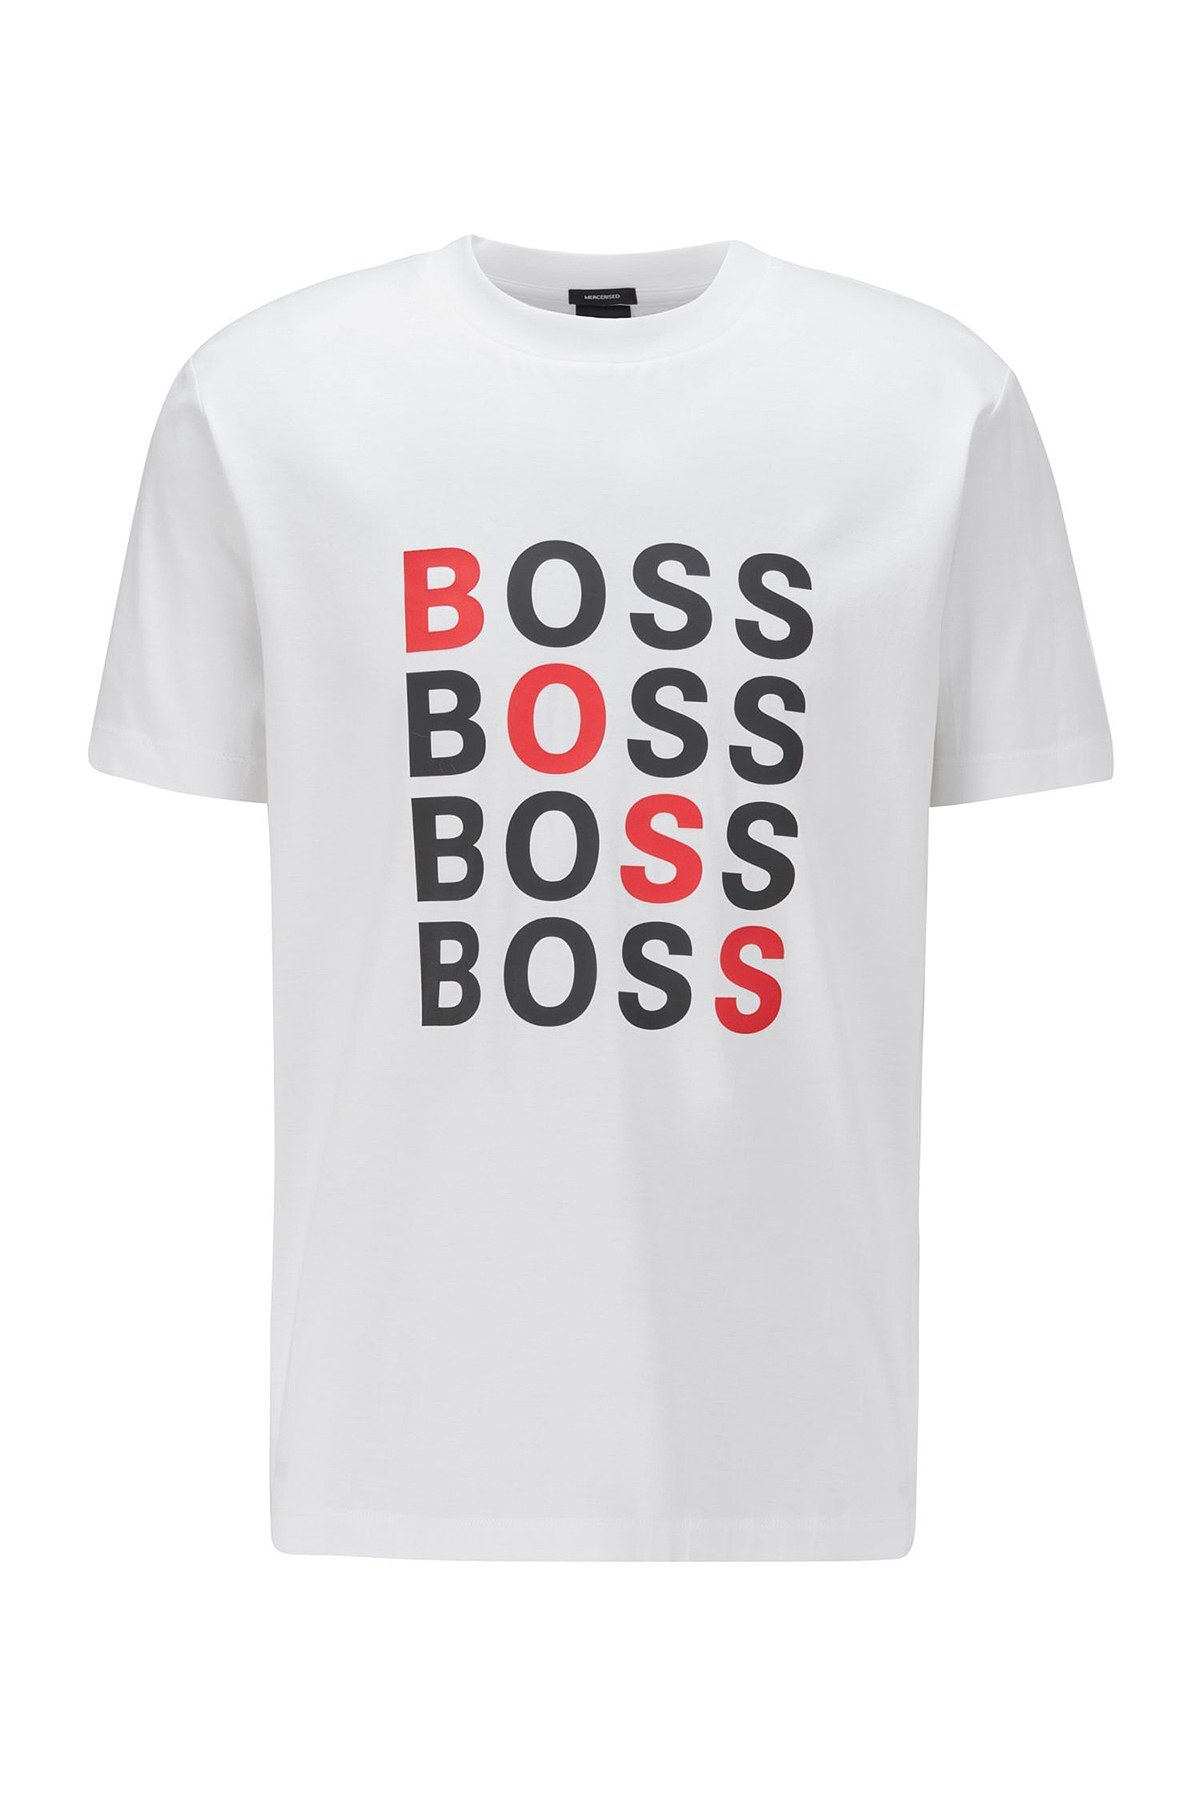 Hugo Boss Erkek T Shirt 50450235 100 BEYAZ